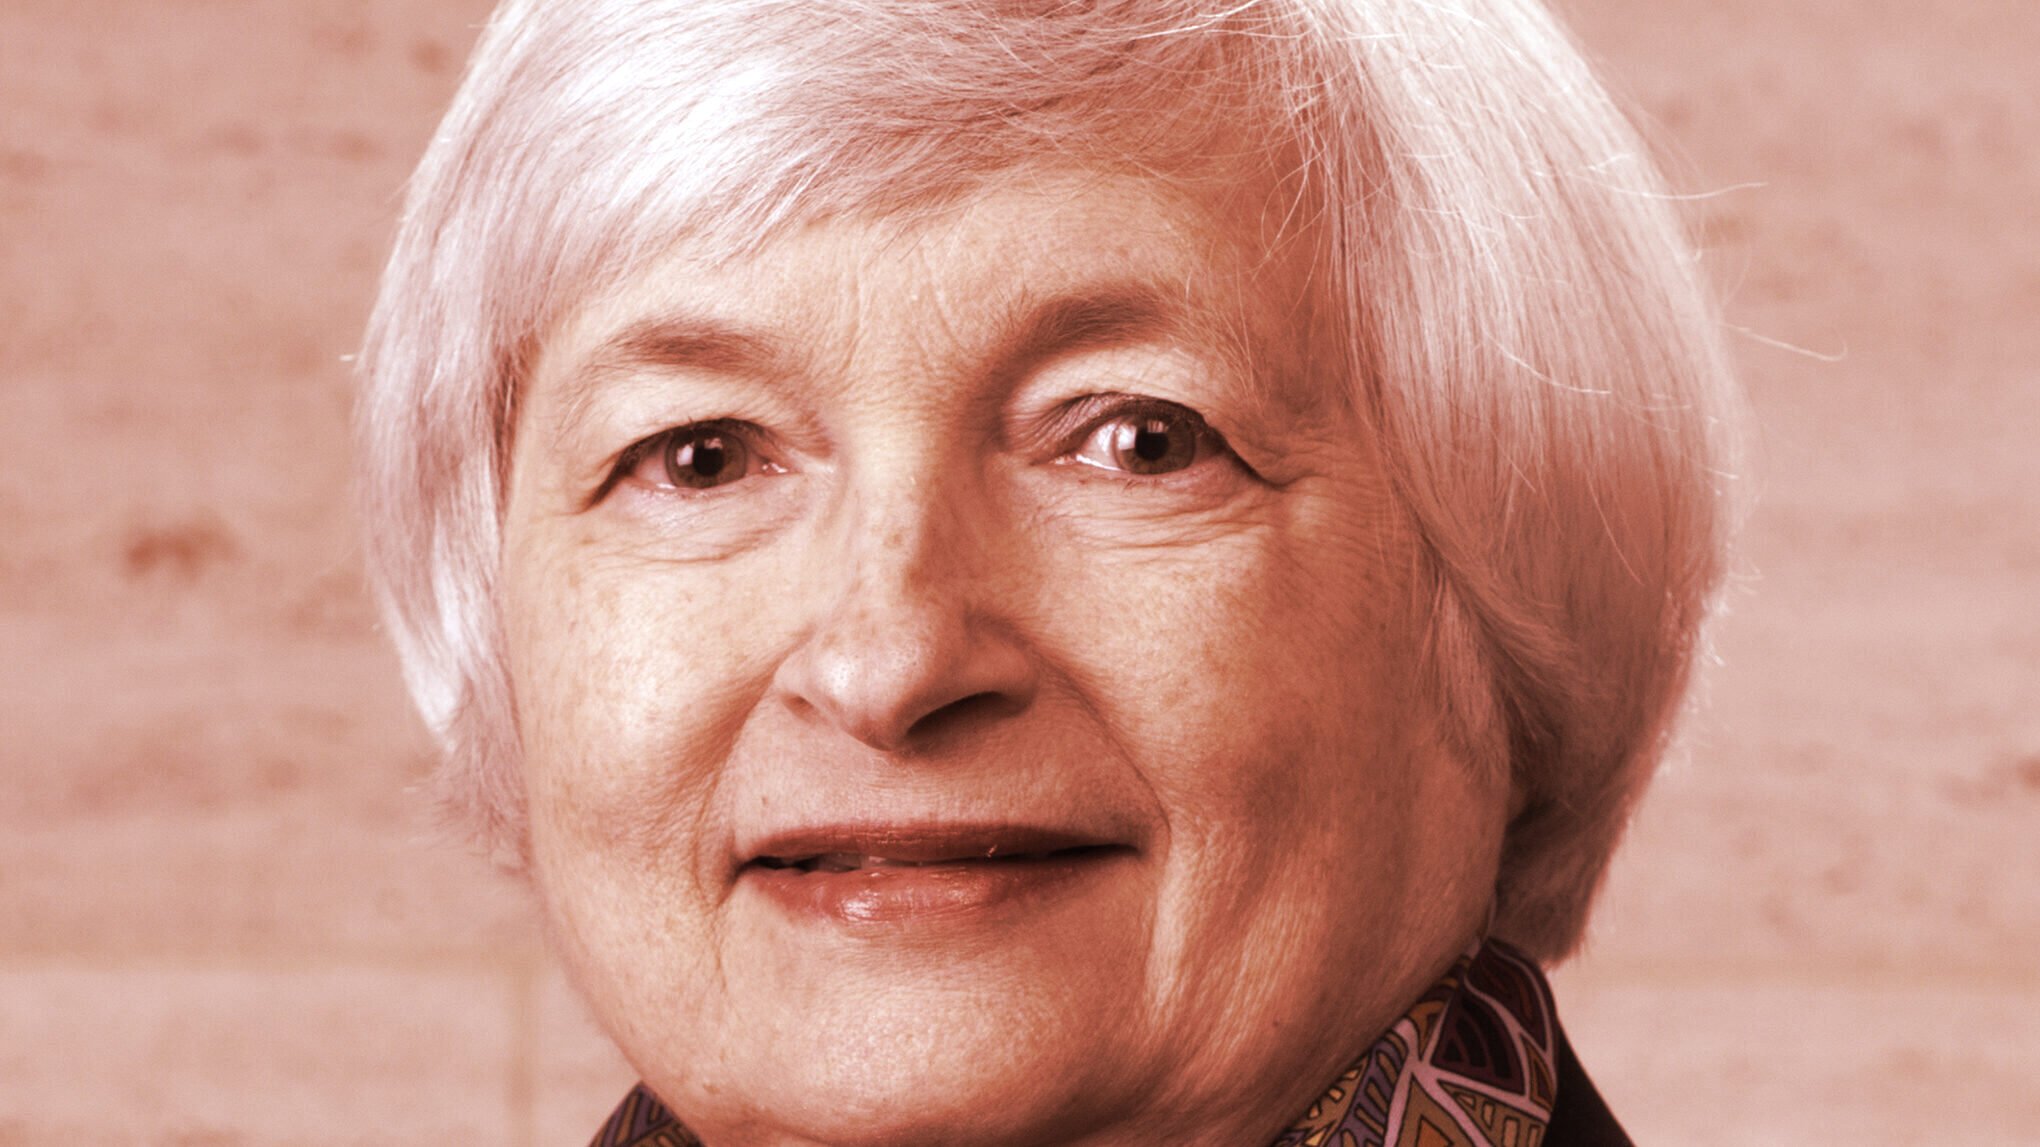 Treasury’s Janet Yellen: Bitcoin ‘Very Risky’ Option for Retirement Savings